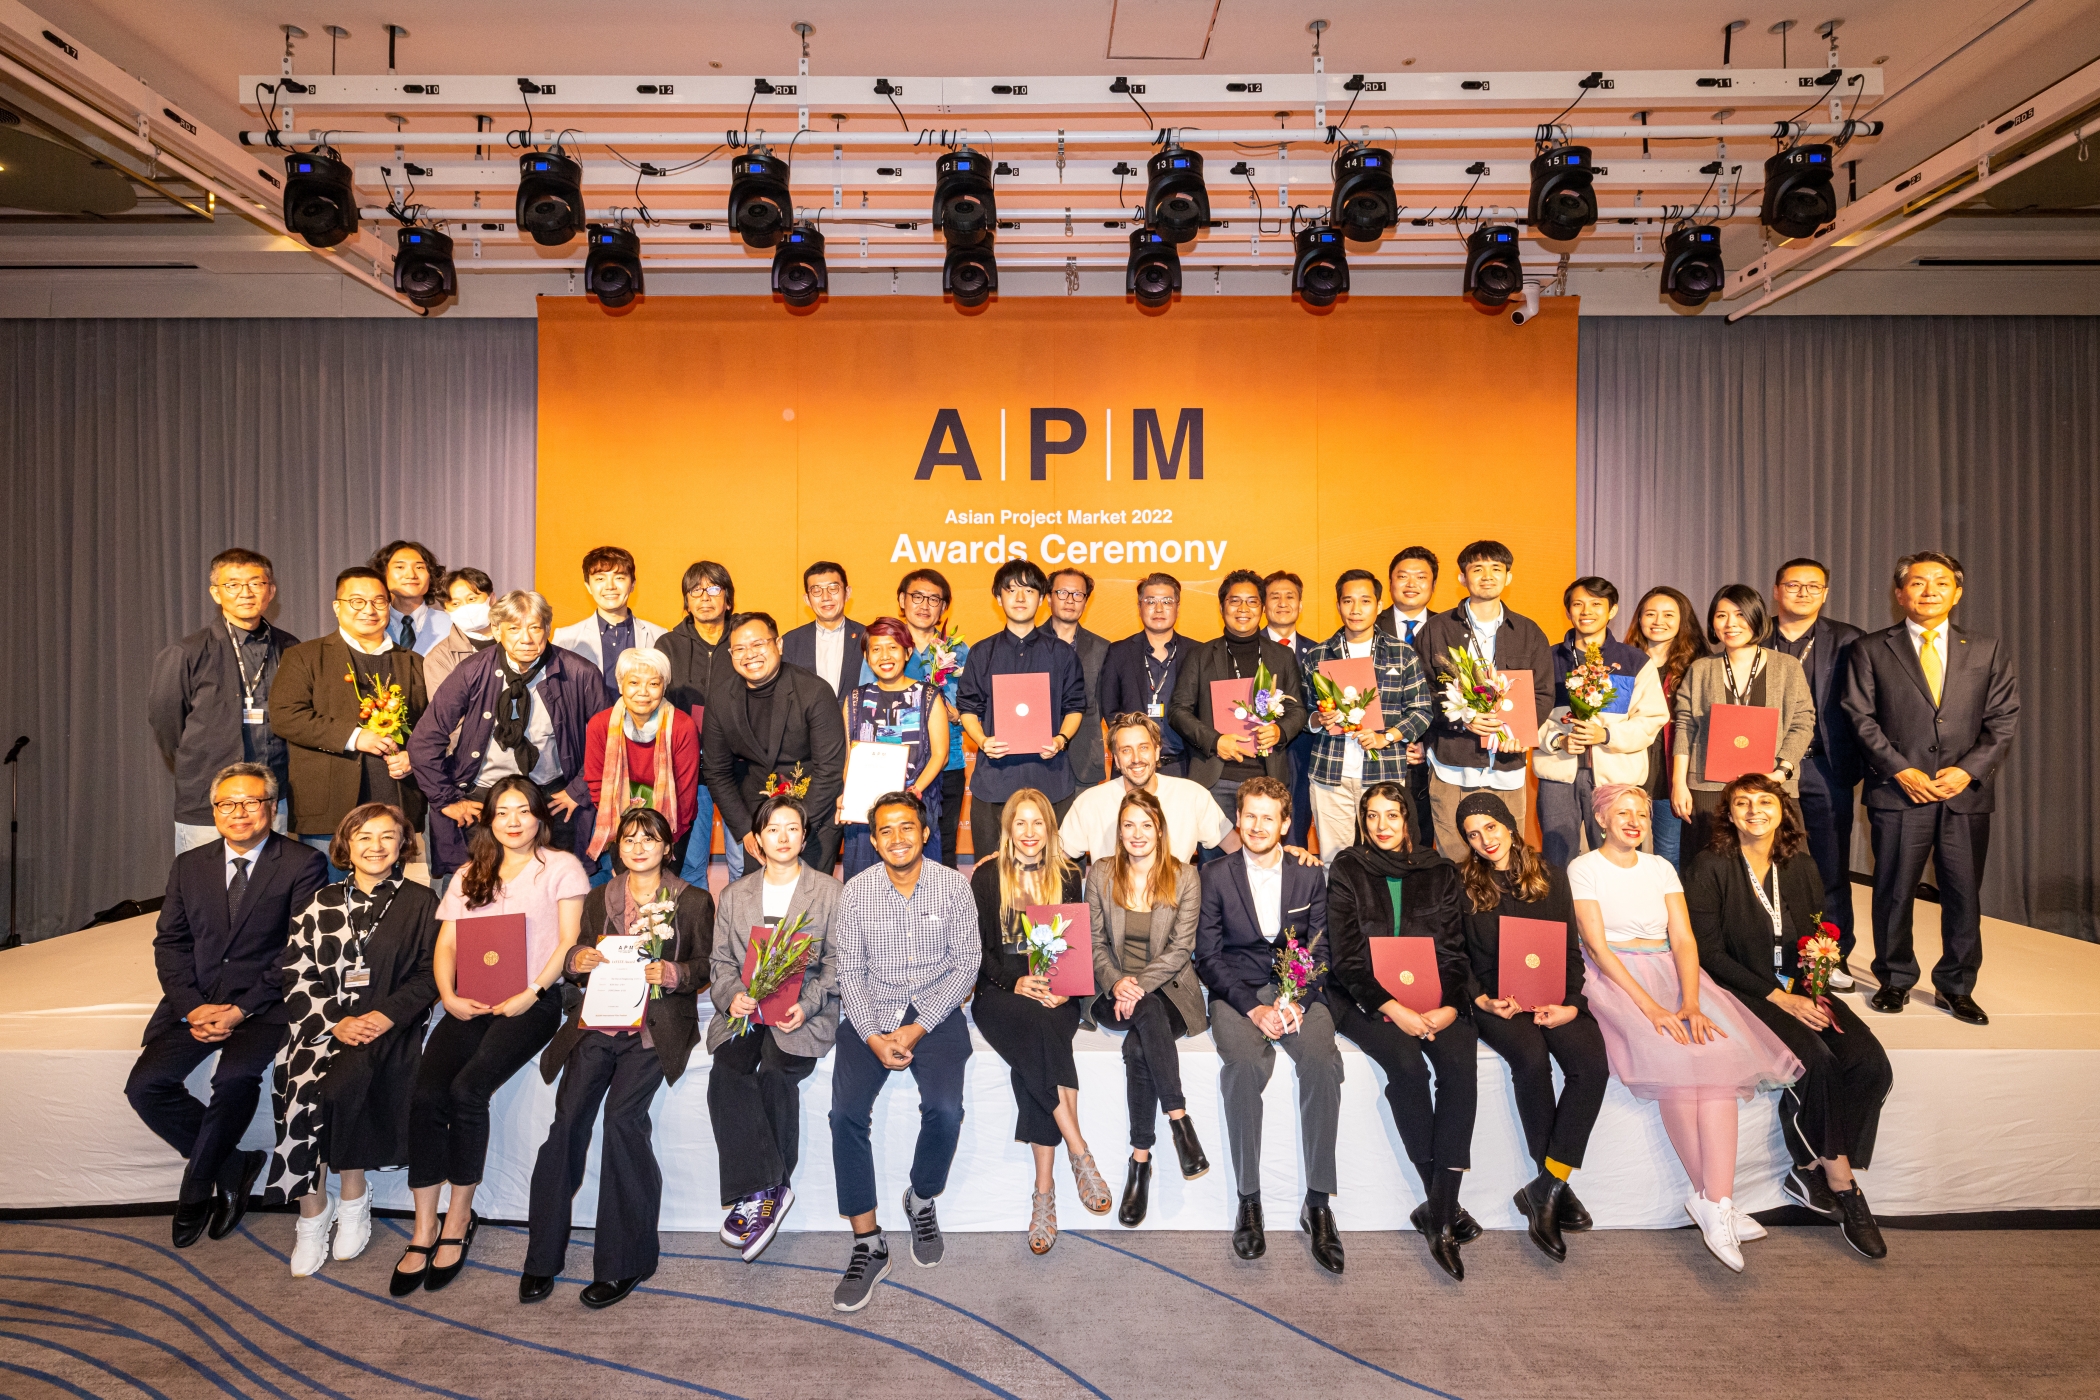 Asian Project Market 2022 Awards Ceremony